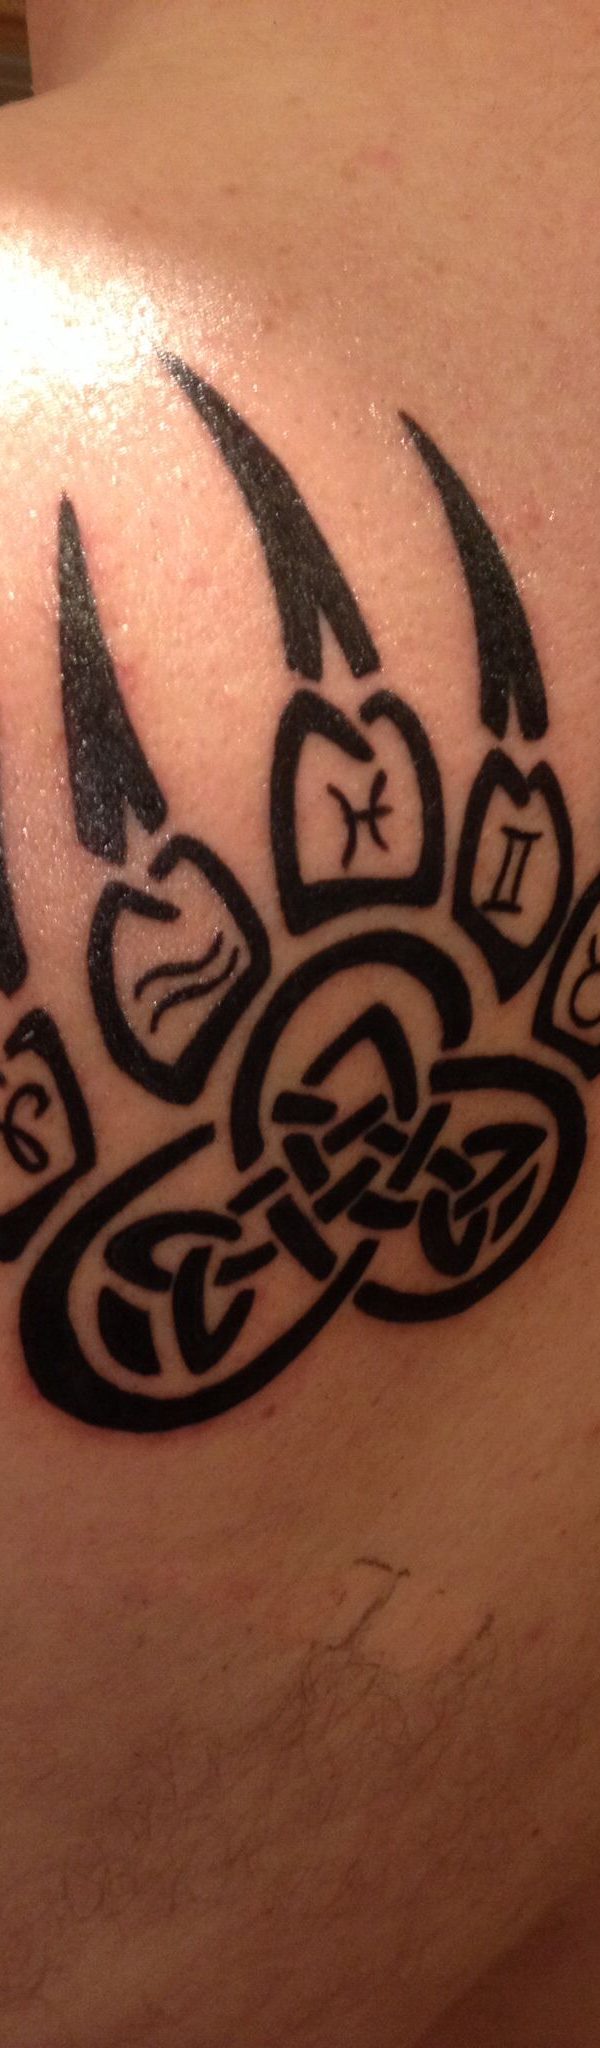 Rich Symbol Family Tattoos - Symbol Family Tattoos - Family Tattoos -  MomCanvas